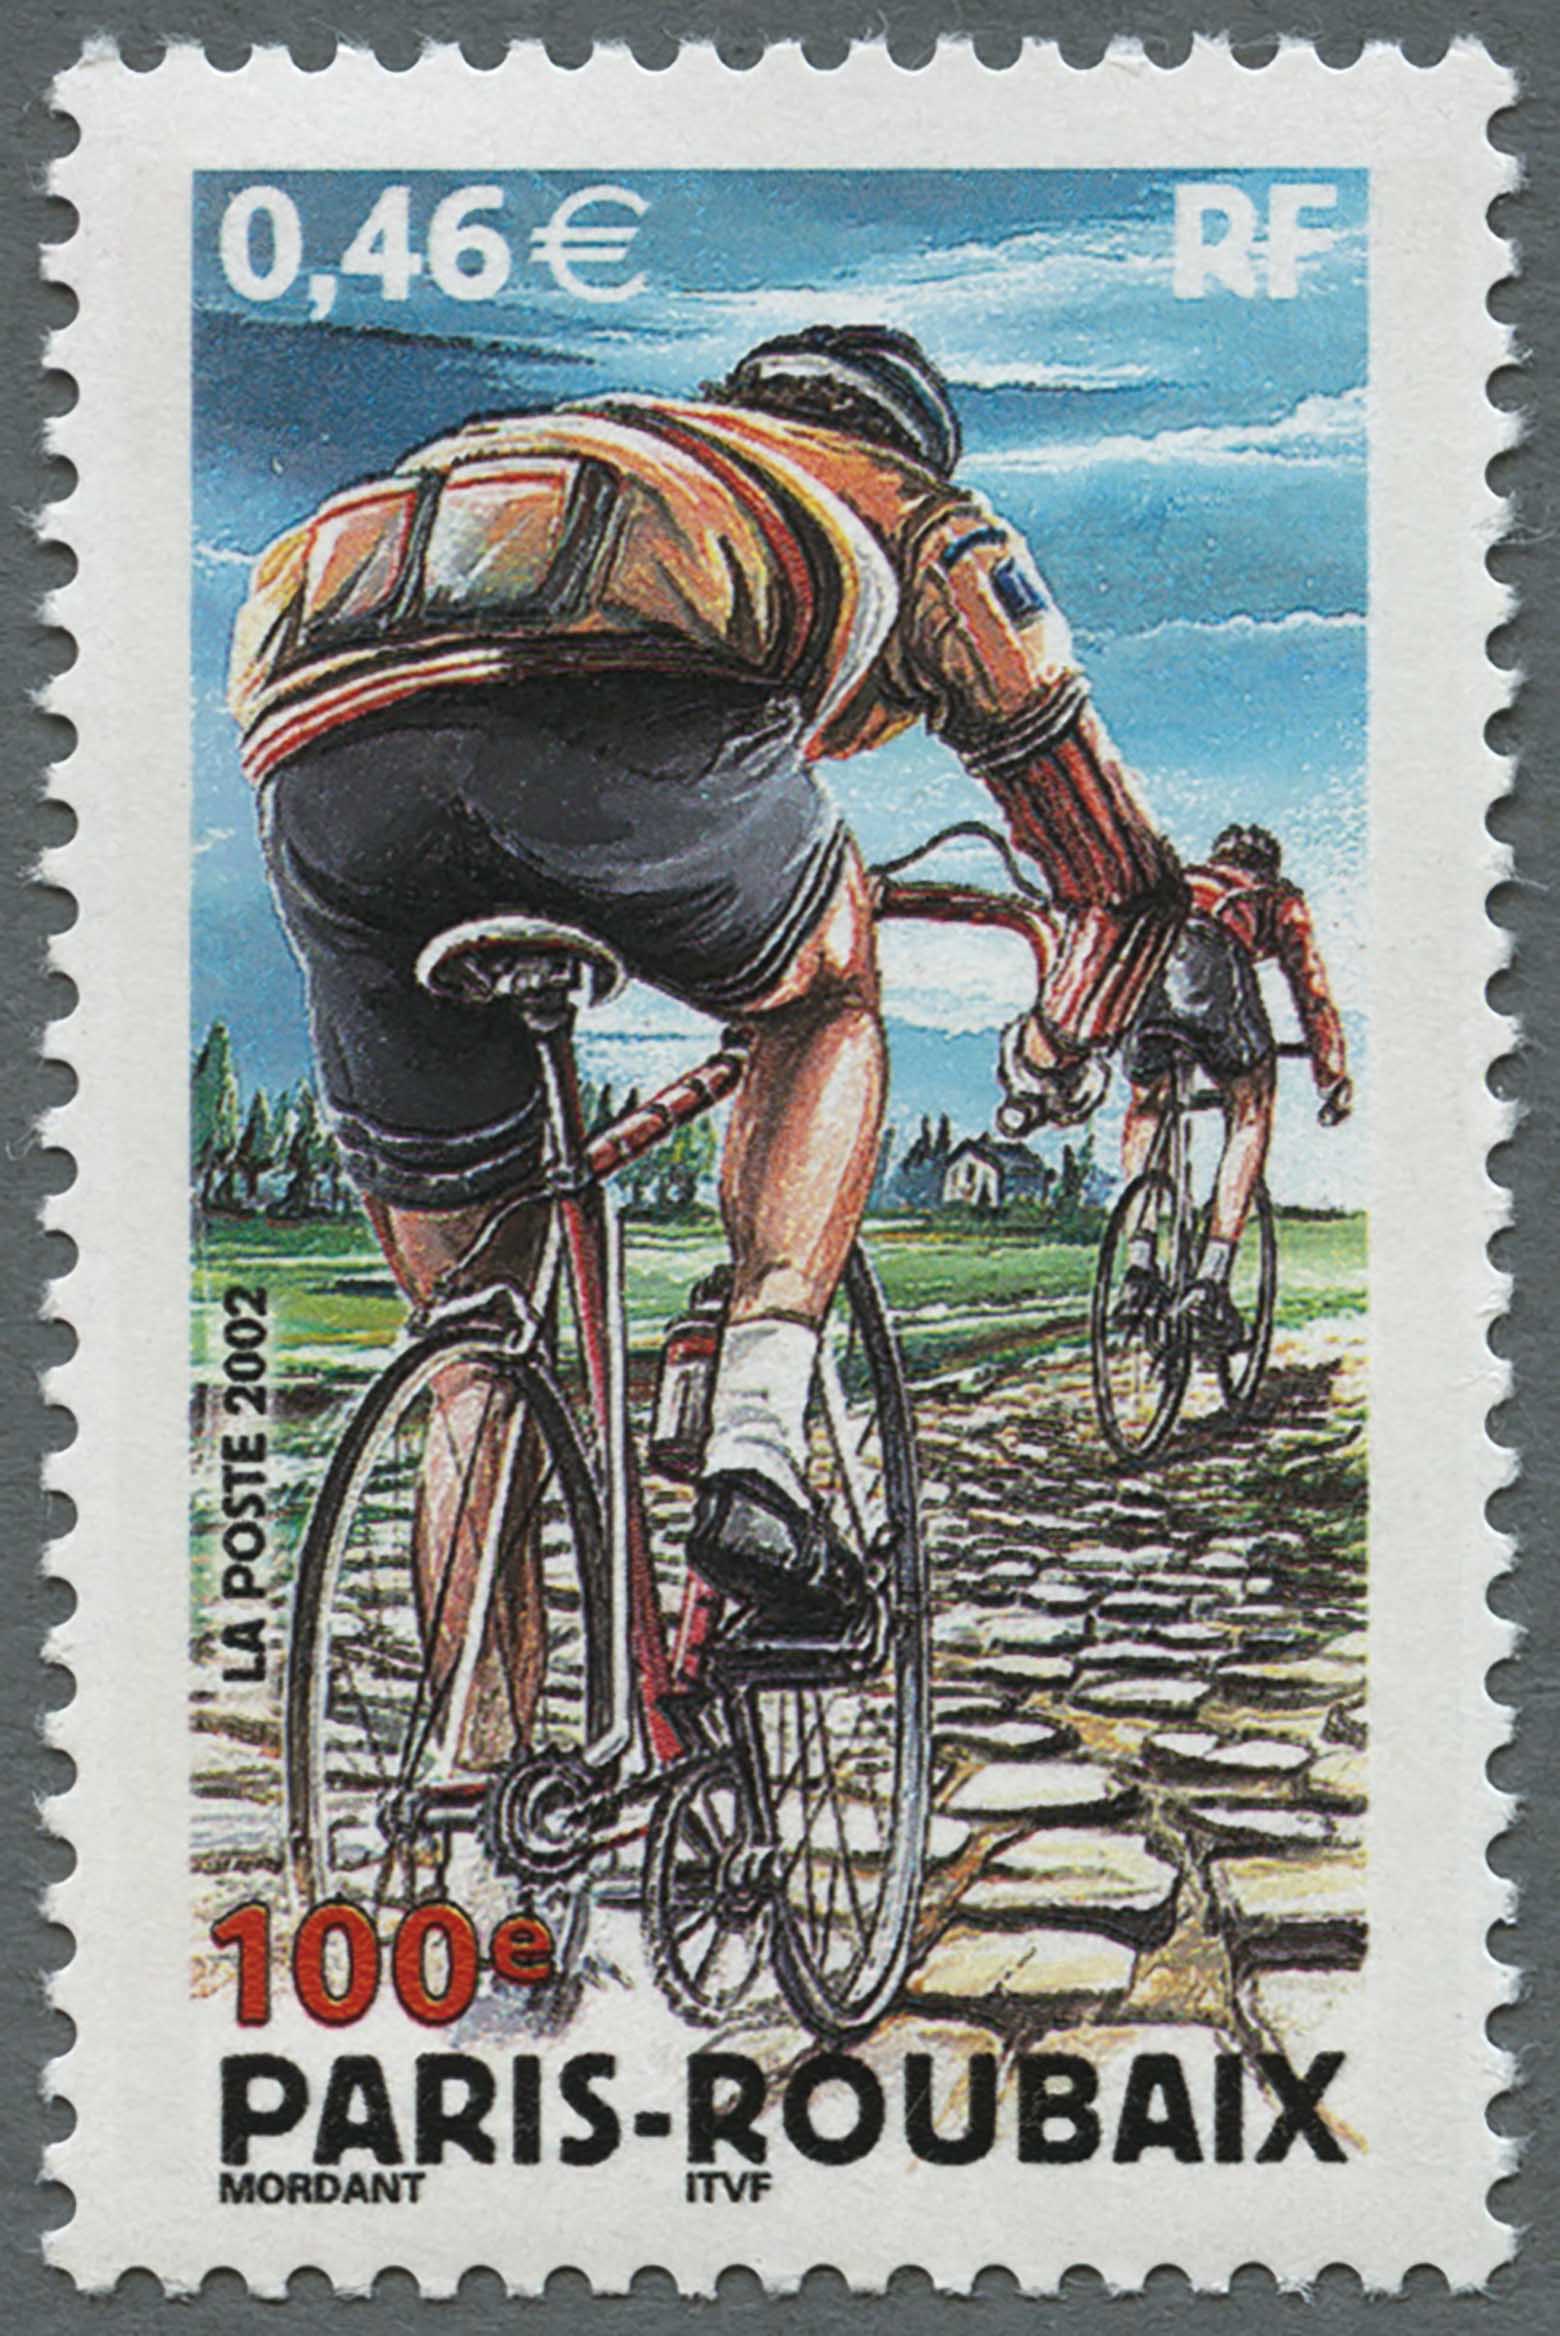 La Poste - Paris-Roubaix stamp main image